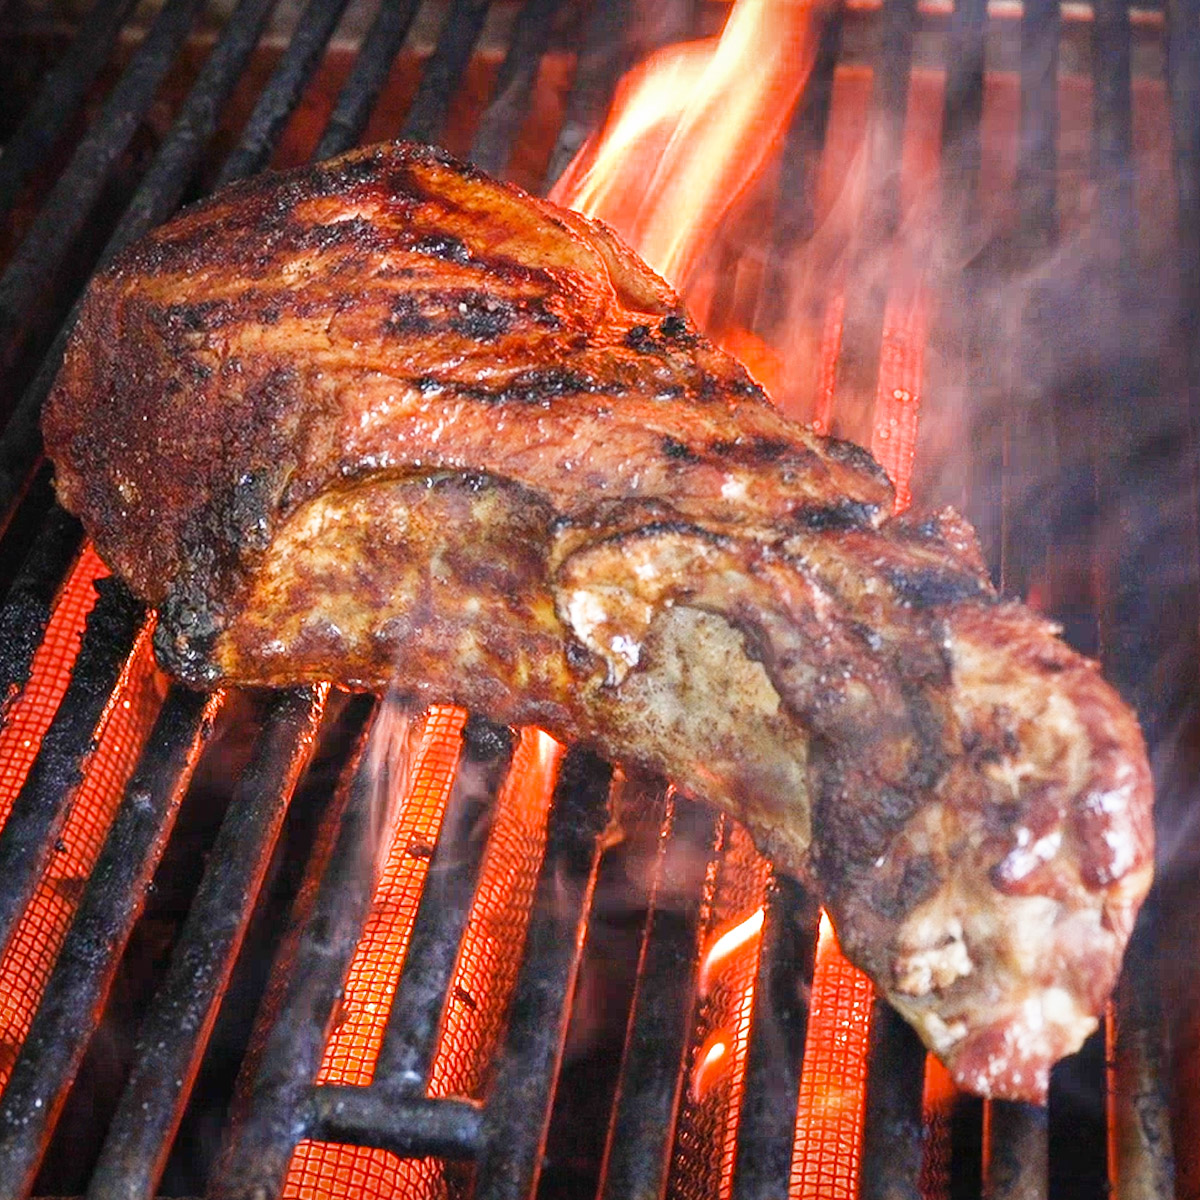 Sear the pork chops on a hot grill.